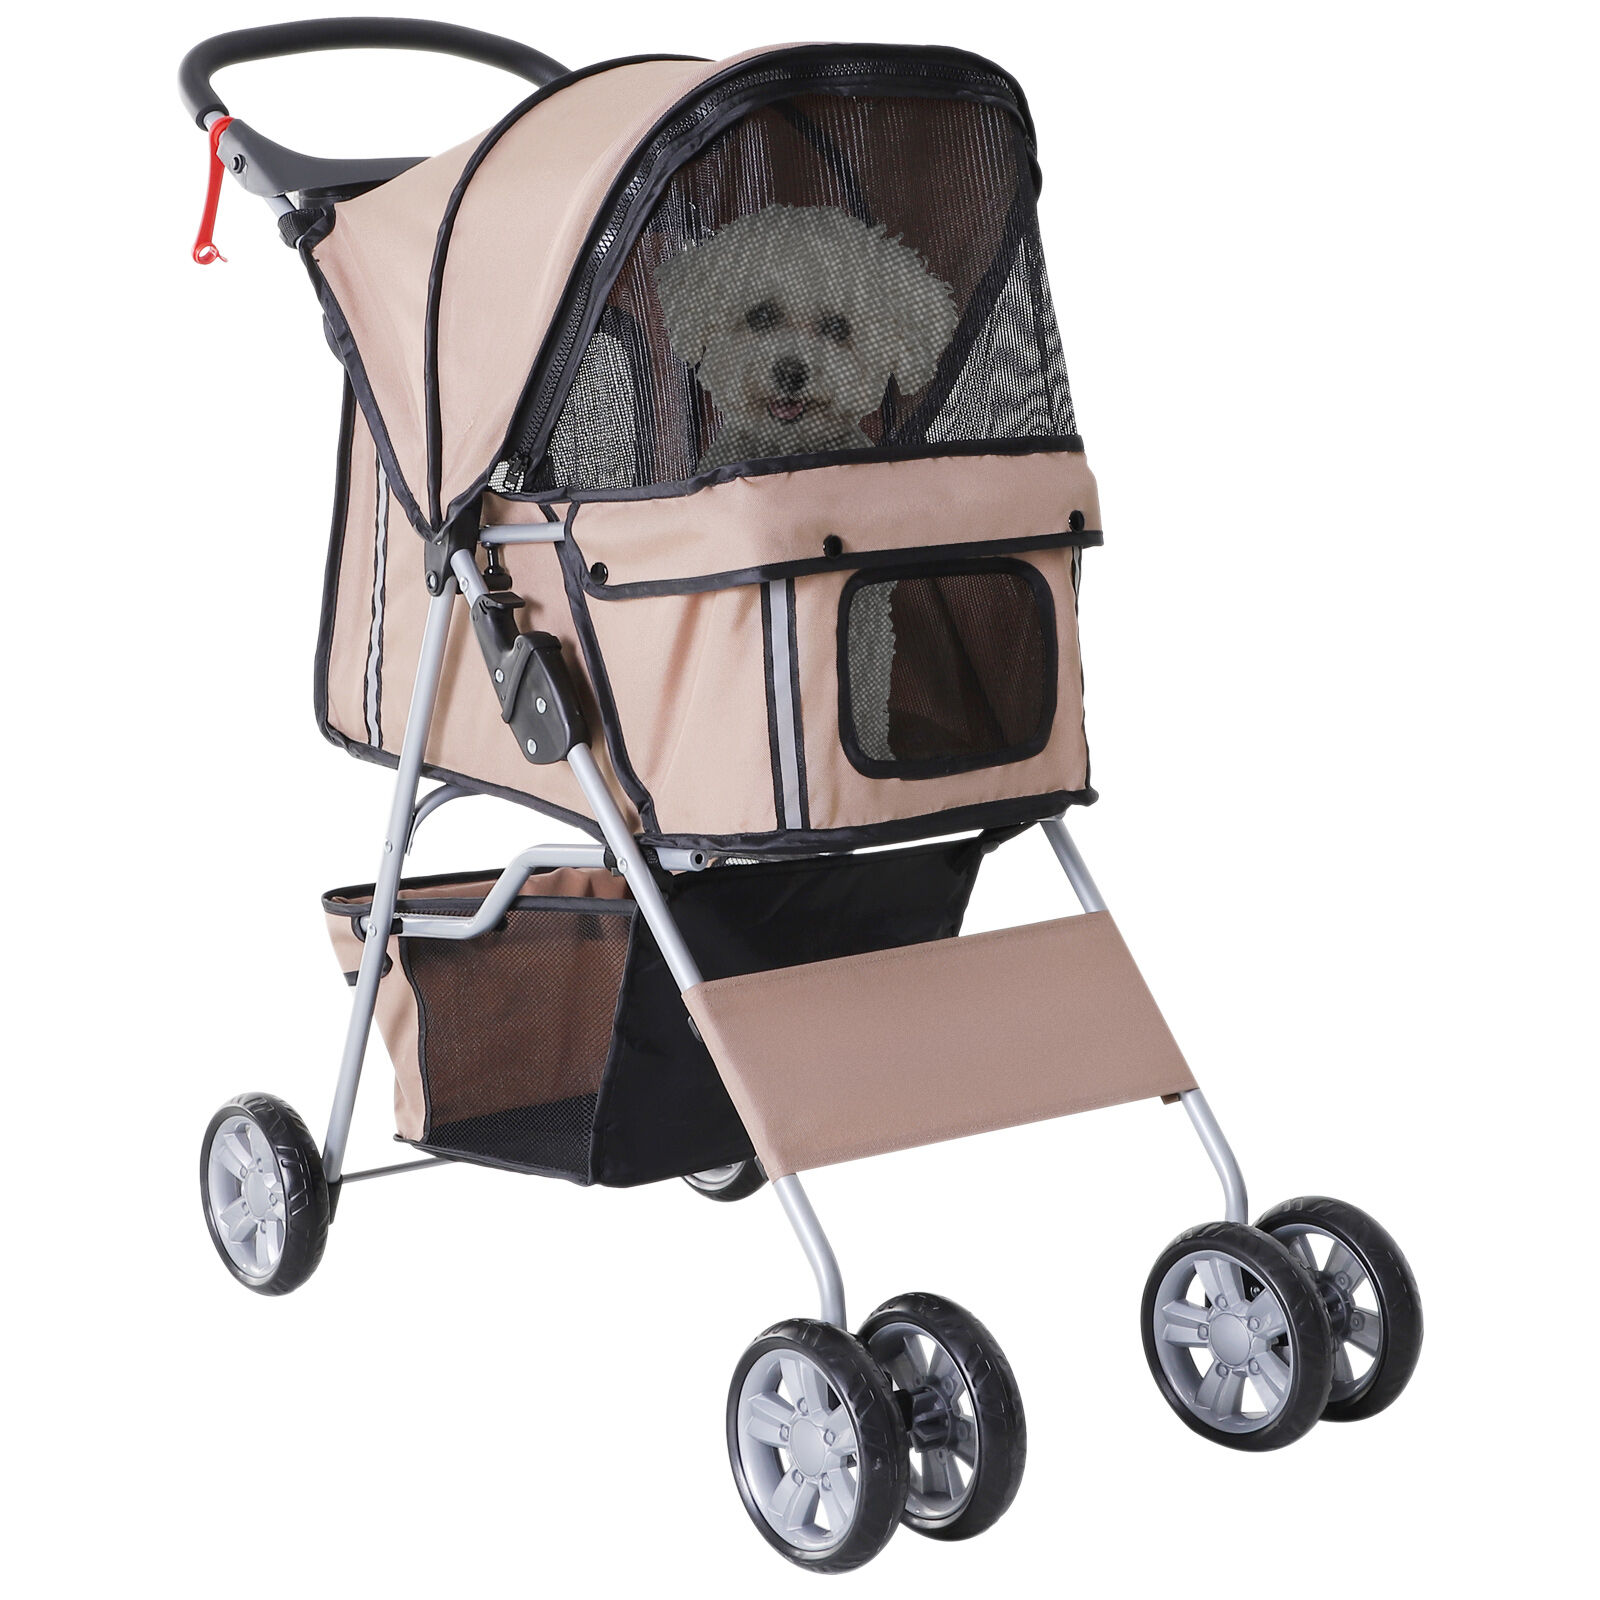 PawHut Pet Stroller Dog Pram Foldable with Wheels, Zipper Entry, Cup Holder, Storage Basket, Brown